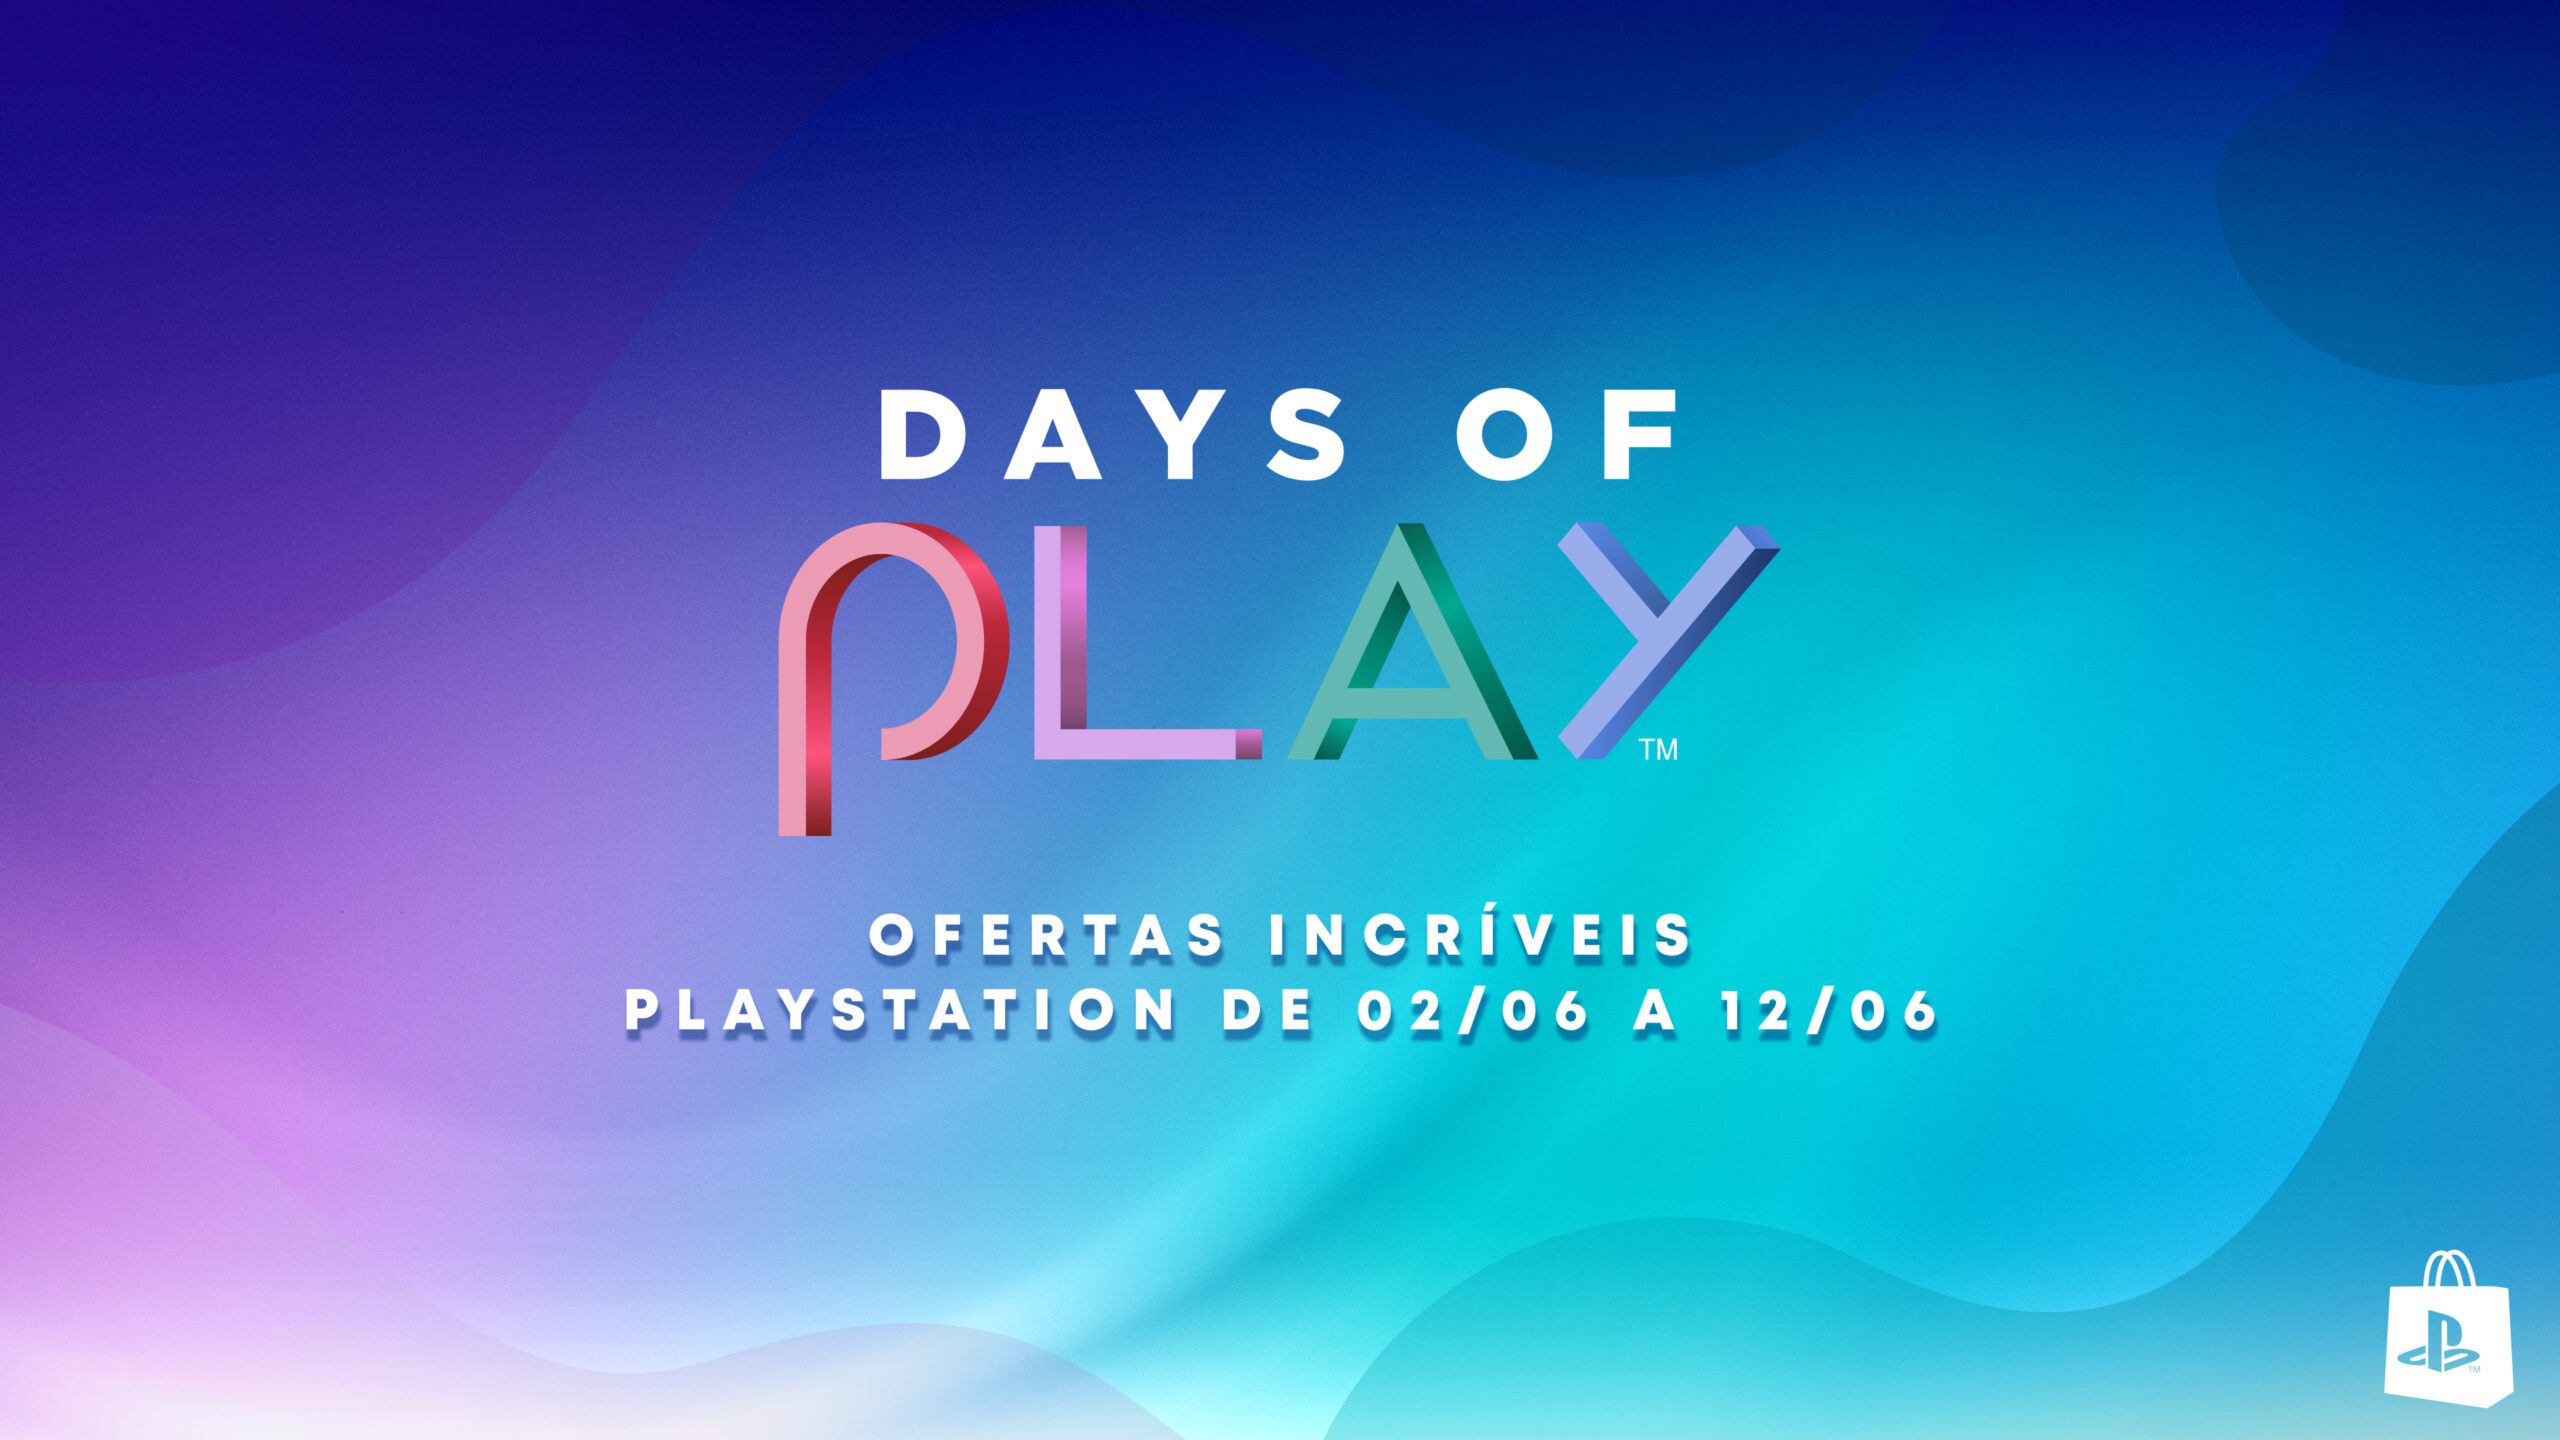 PlayStation Brasil on X: A promoção Days of Play começa hoje! Uma